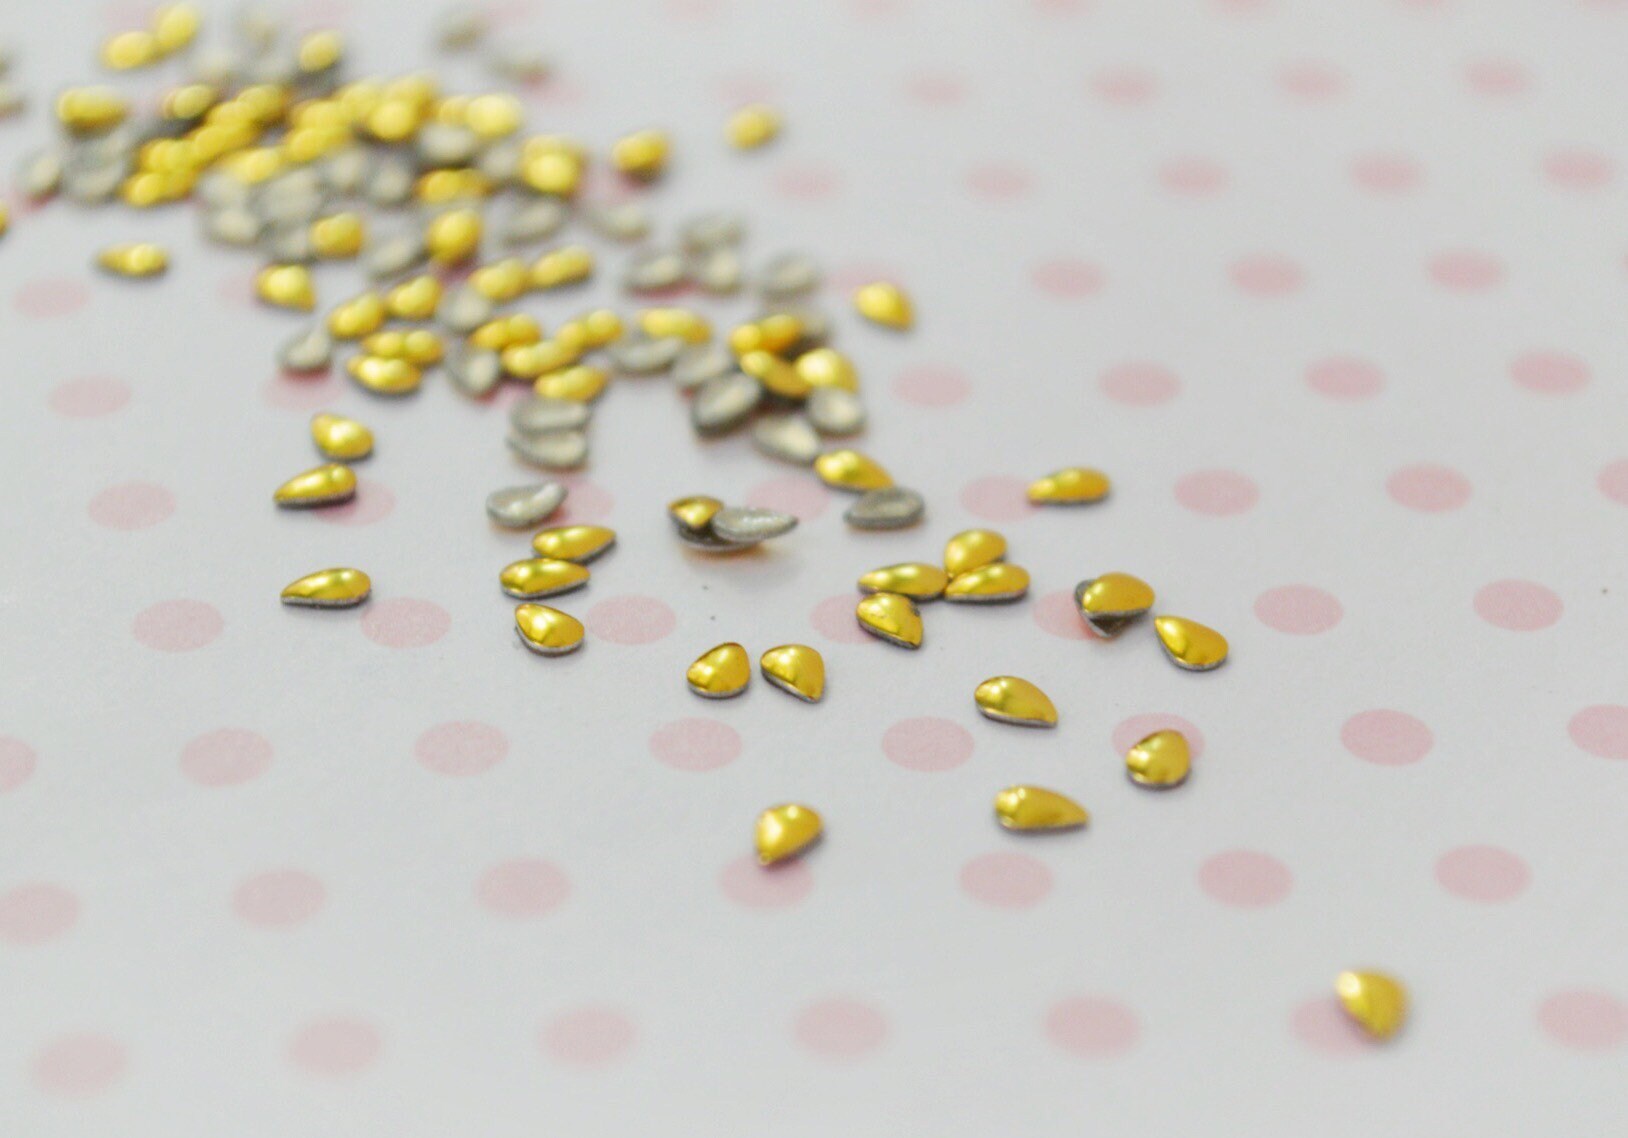 3mm Metallic Gold Beads, High Quality No Hole Beads, Fake Dragee Spr, MiniatureSweet, Kawaii Resin Crafts, Decoden Cabochons Supplies